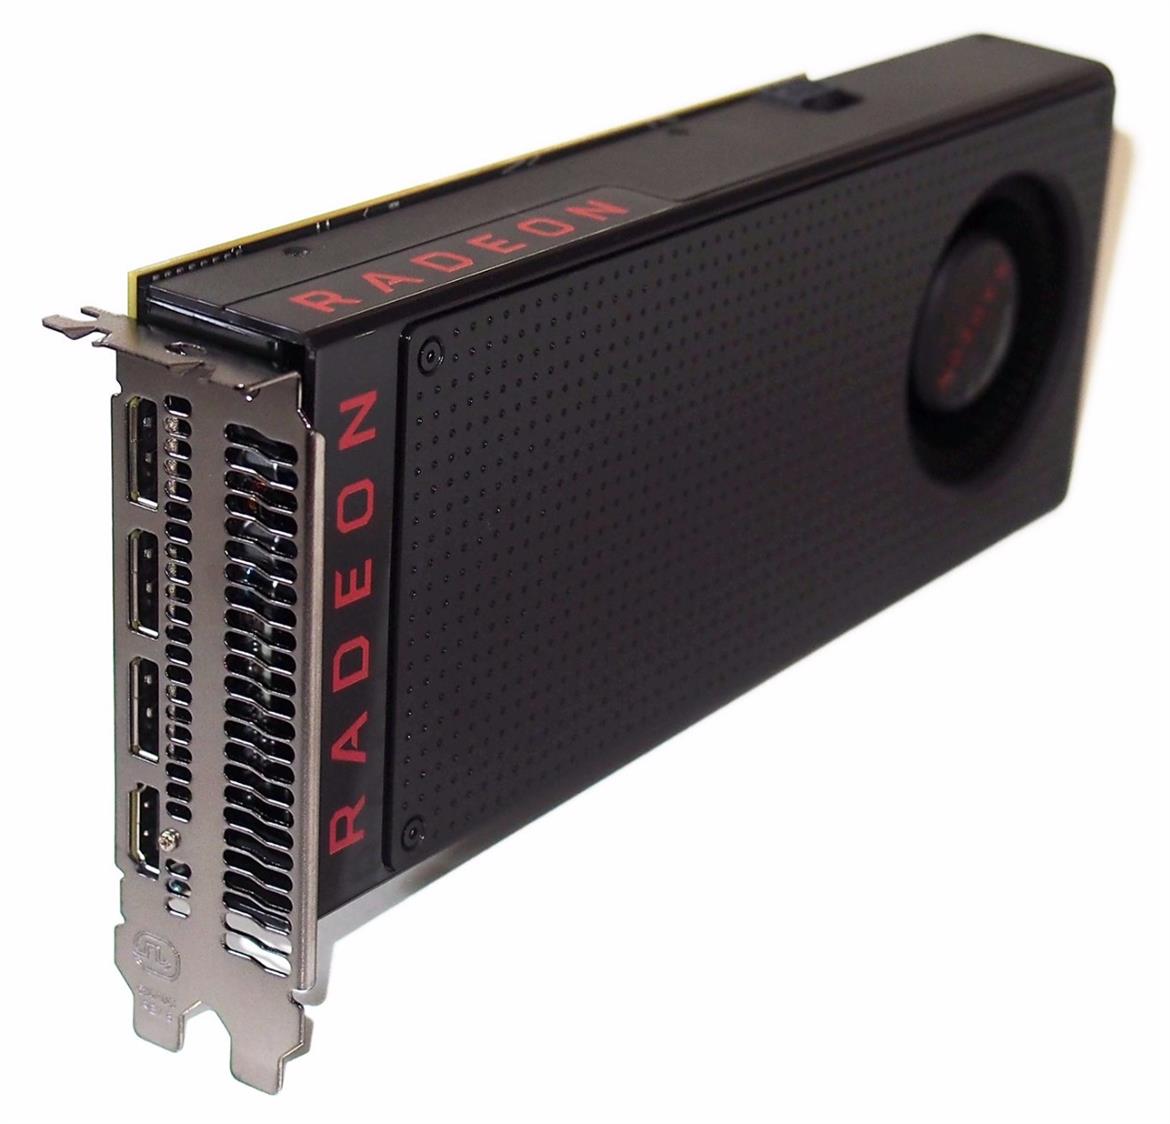 AMD Radeon RX 480 Hands-On Preview, Testing Underway